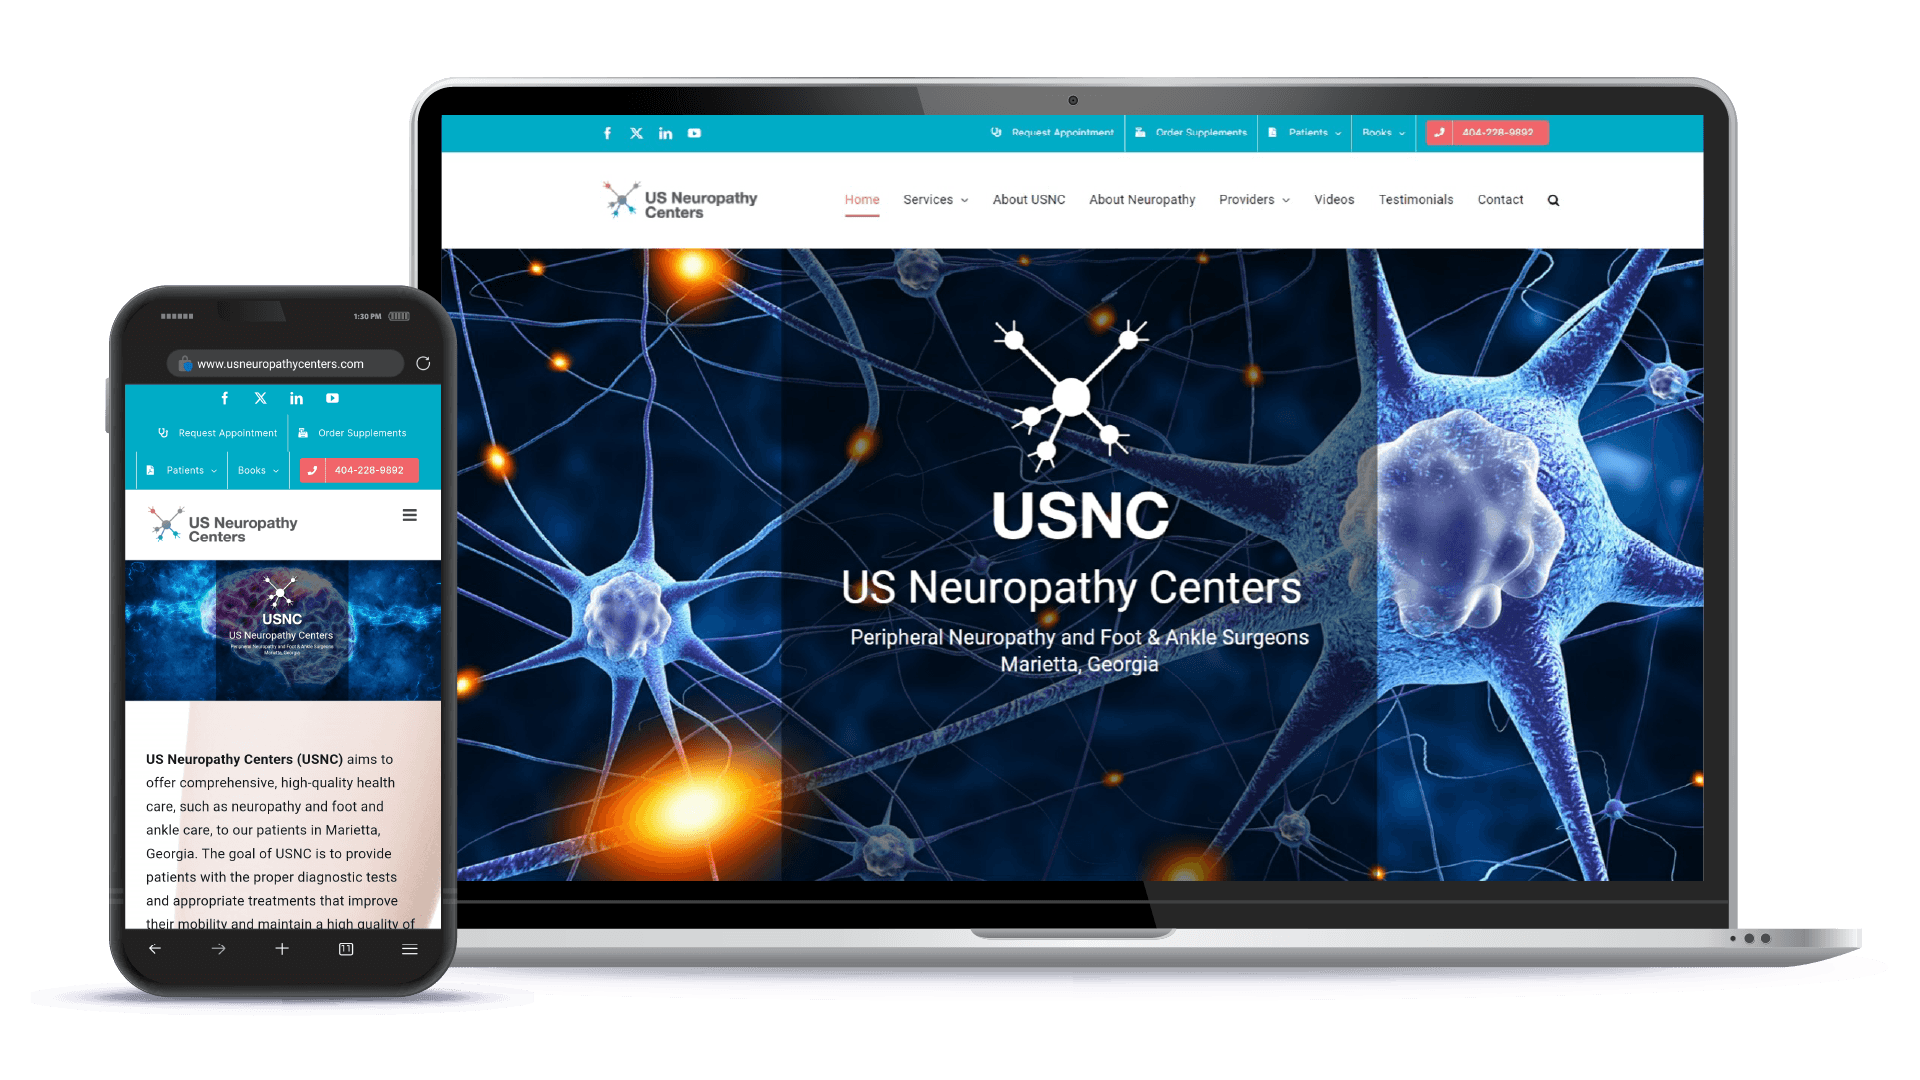 US Neuropathy Centers (USNC)